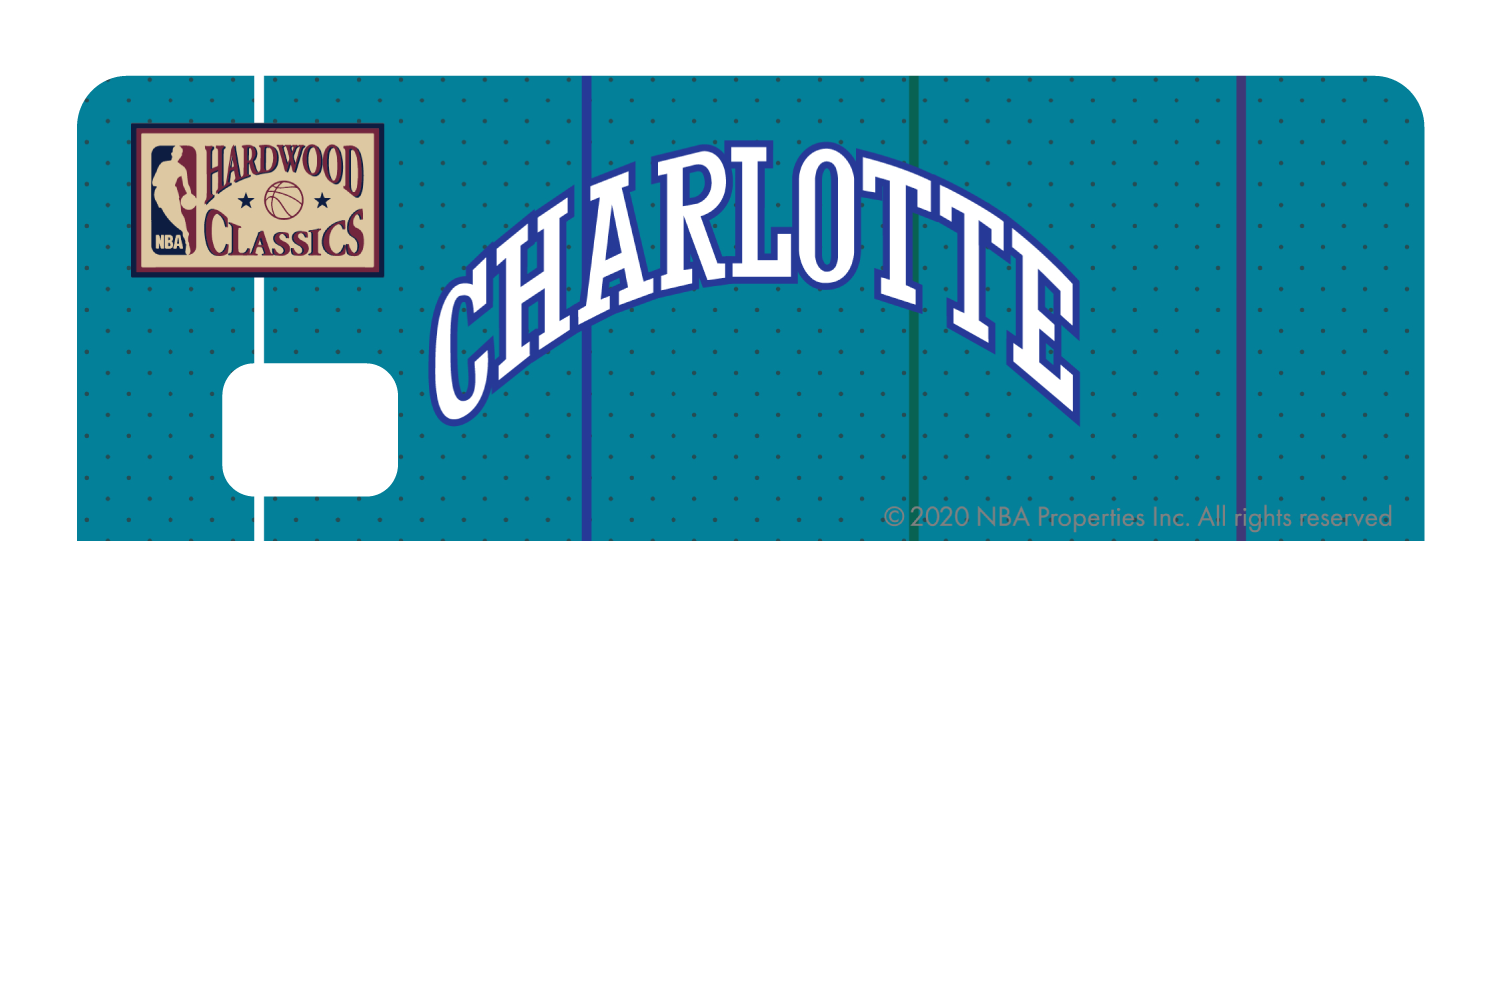 Charlotte Hornets: Away Hardwood Classics